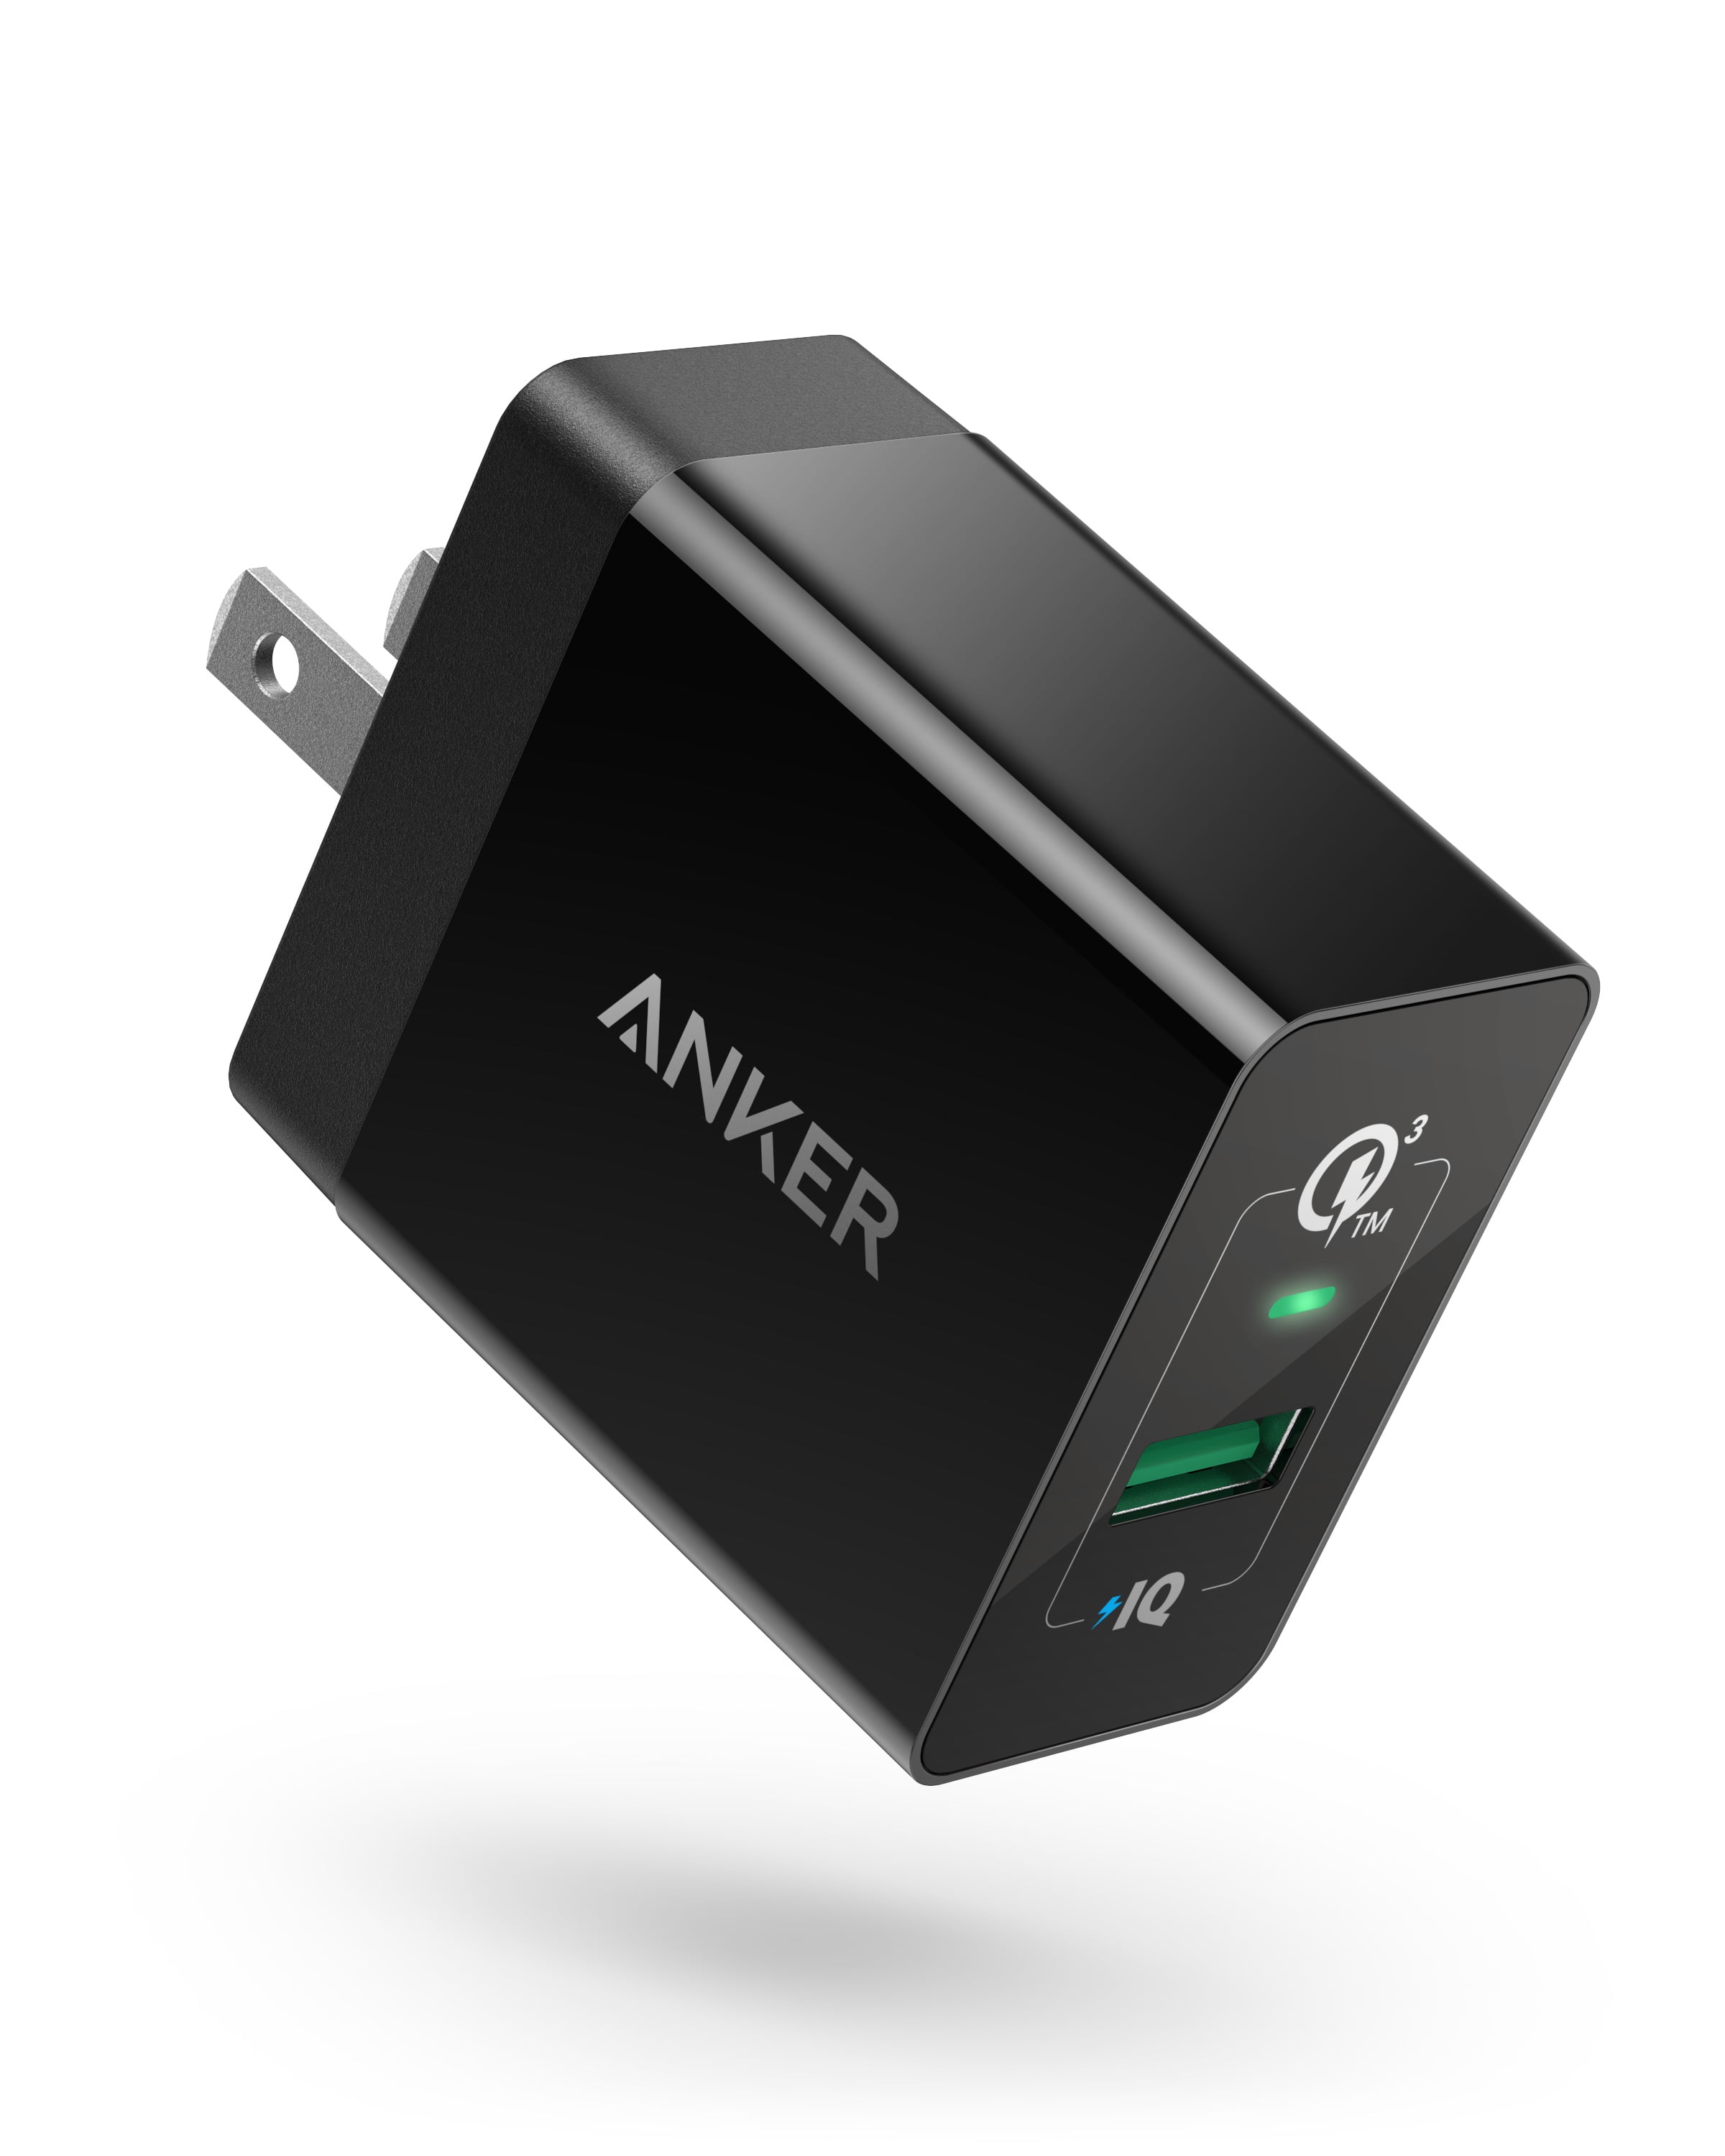 Anker - Anker PowerCore Speed 10000mAh Power Bank Batterie Externe avec QC  3.0 et Power IQ Quick Charge 3.0 pour Samsung Galaxy S7 / S6 / Edge iPhone  iPad LG G4 Nexus